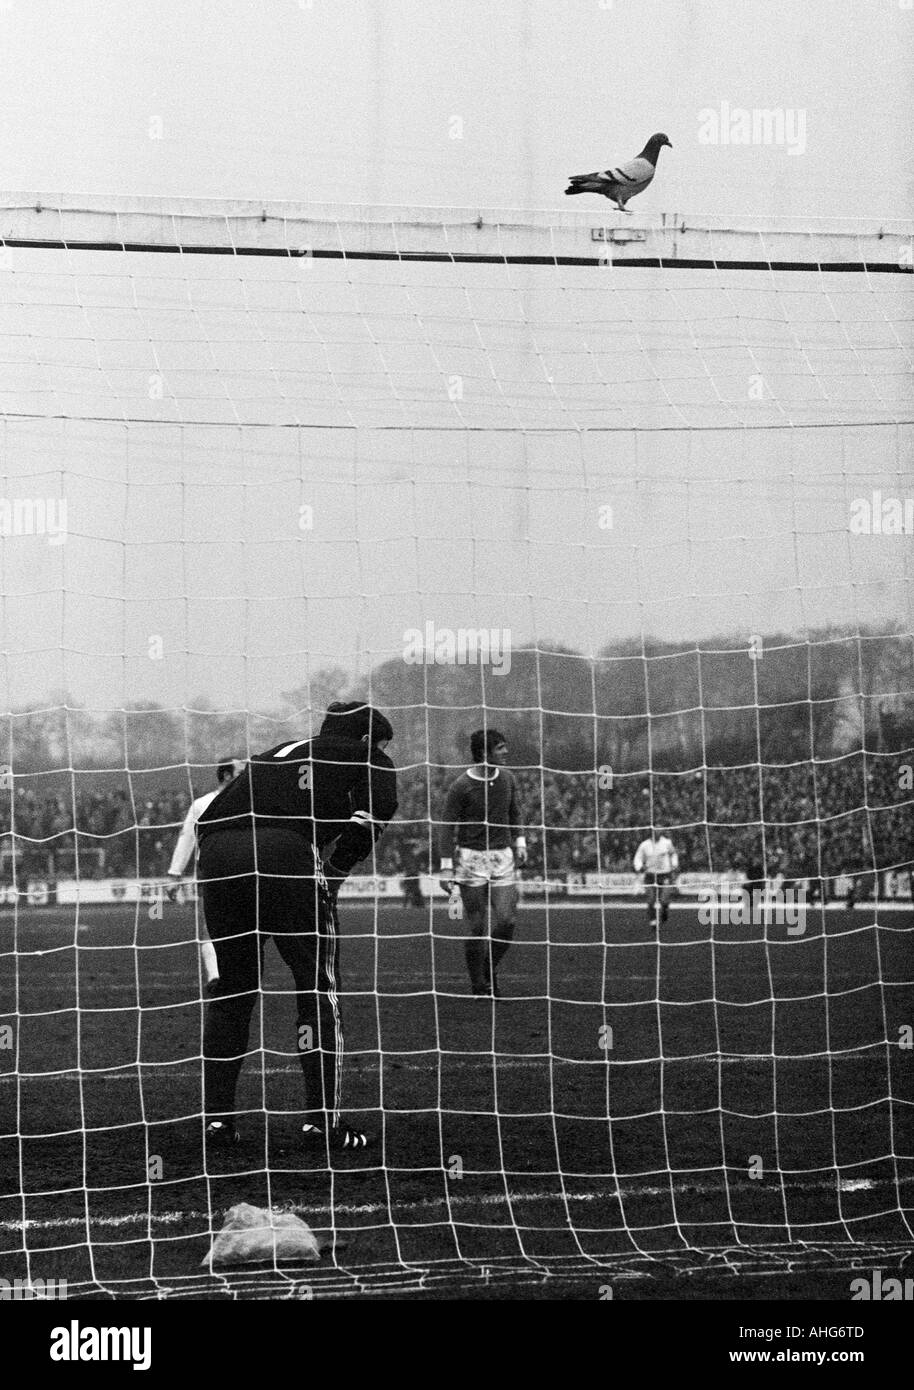 football, Bundesliga, 1969/1970, Niederrhein Stadium in Oberhausen, Rot-Weiss Oberhausen versus FC Schalke 04 0:3, scene of the match, keeper Josef Elting (Schalke) stands in the goal, a pigeon sitting on the crossbar Stock Photo